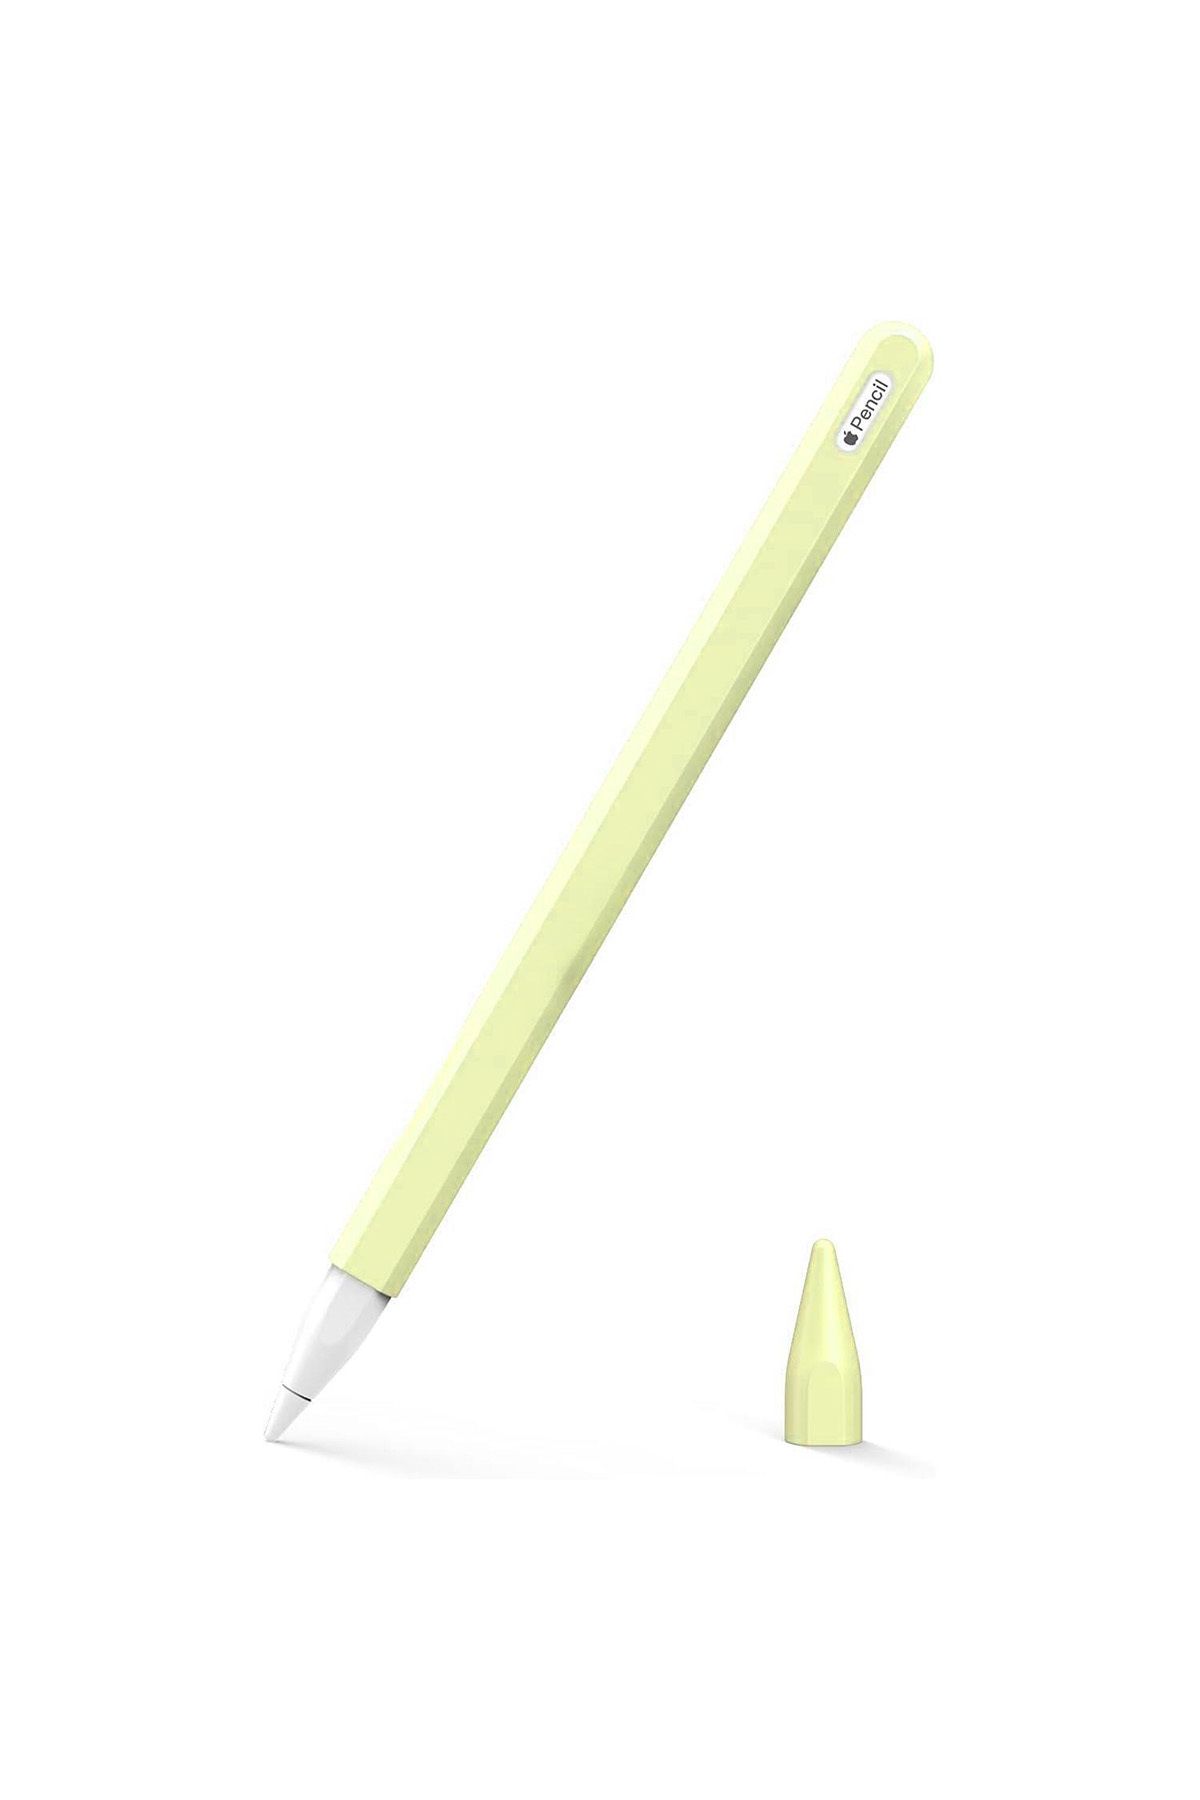 Tagomoon Apple Pencil (2. nesil) Uyumlu Kılıf Renkli Mat Silikon Koruyucu